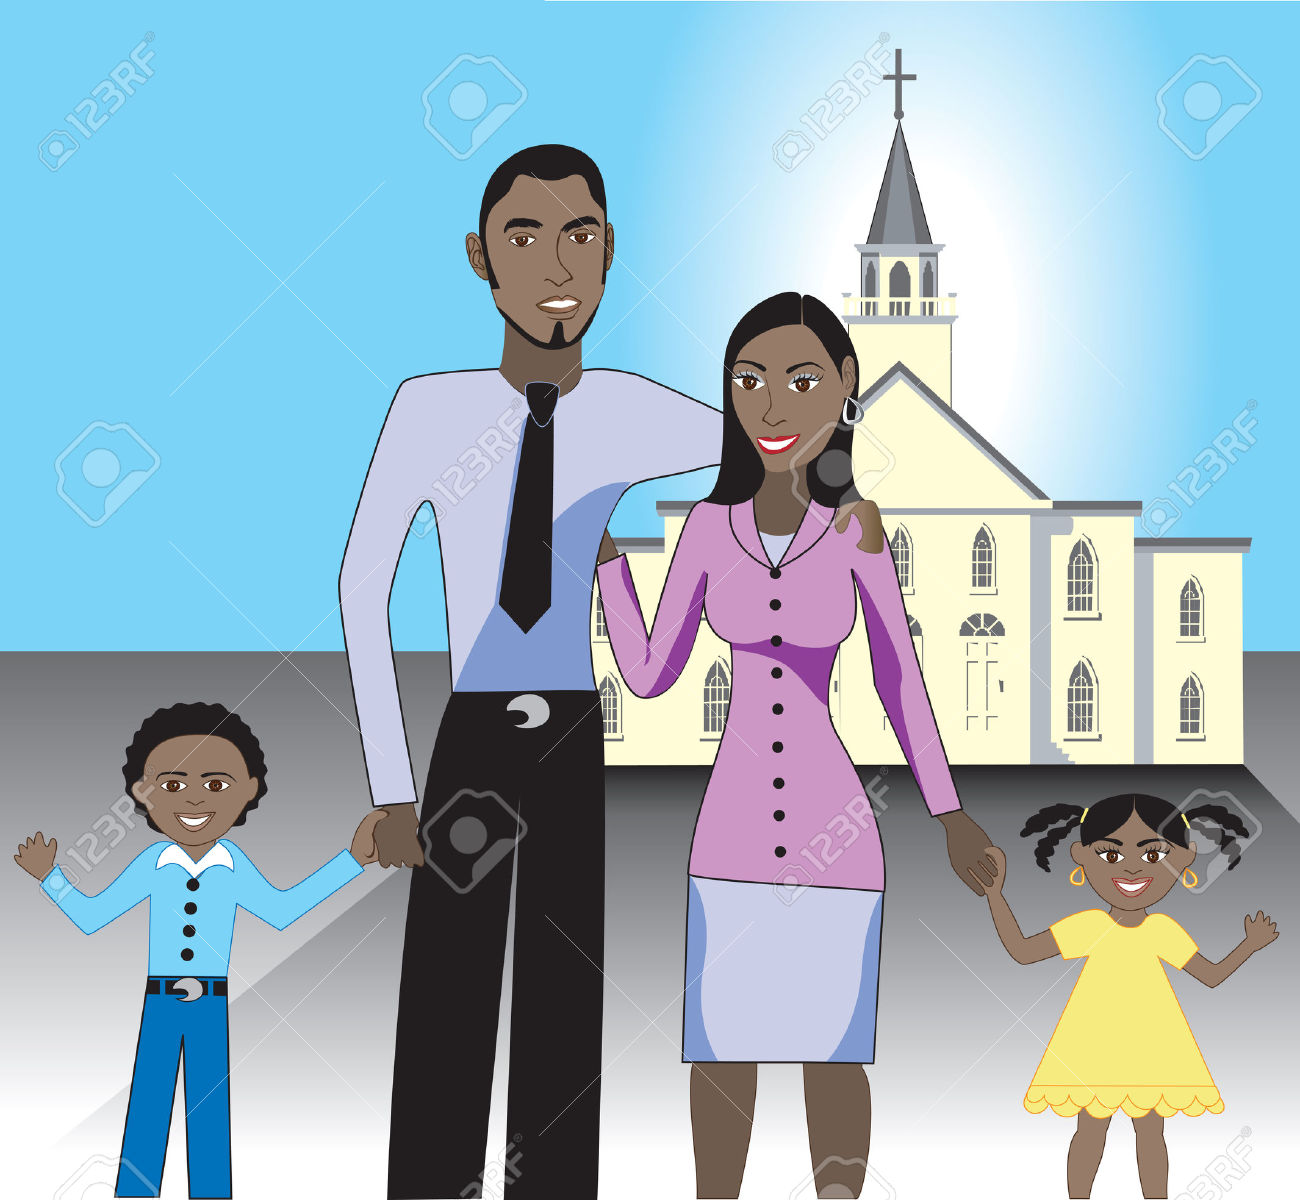 family going to church clip art - photo #33